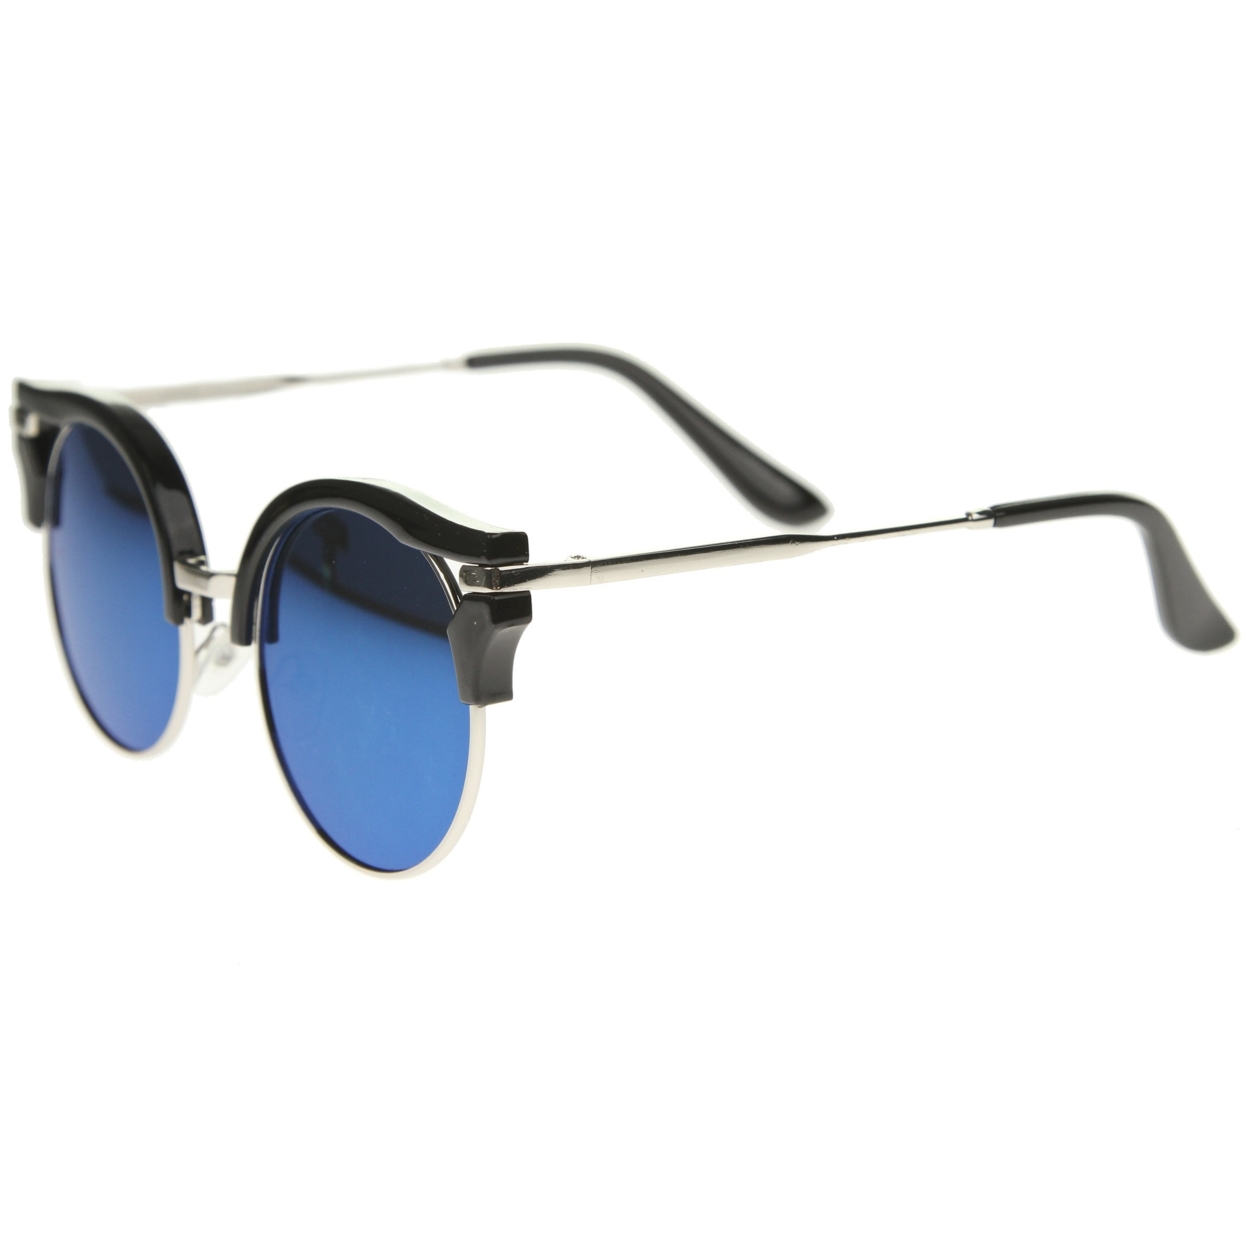 Round Half-Frame Cutout Color Mirror Flat Lens Cat Eye Sunglasses 56mm - Black-Silver / Blue Mirror